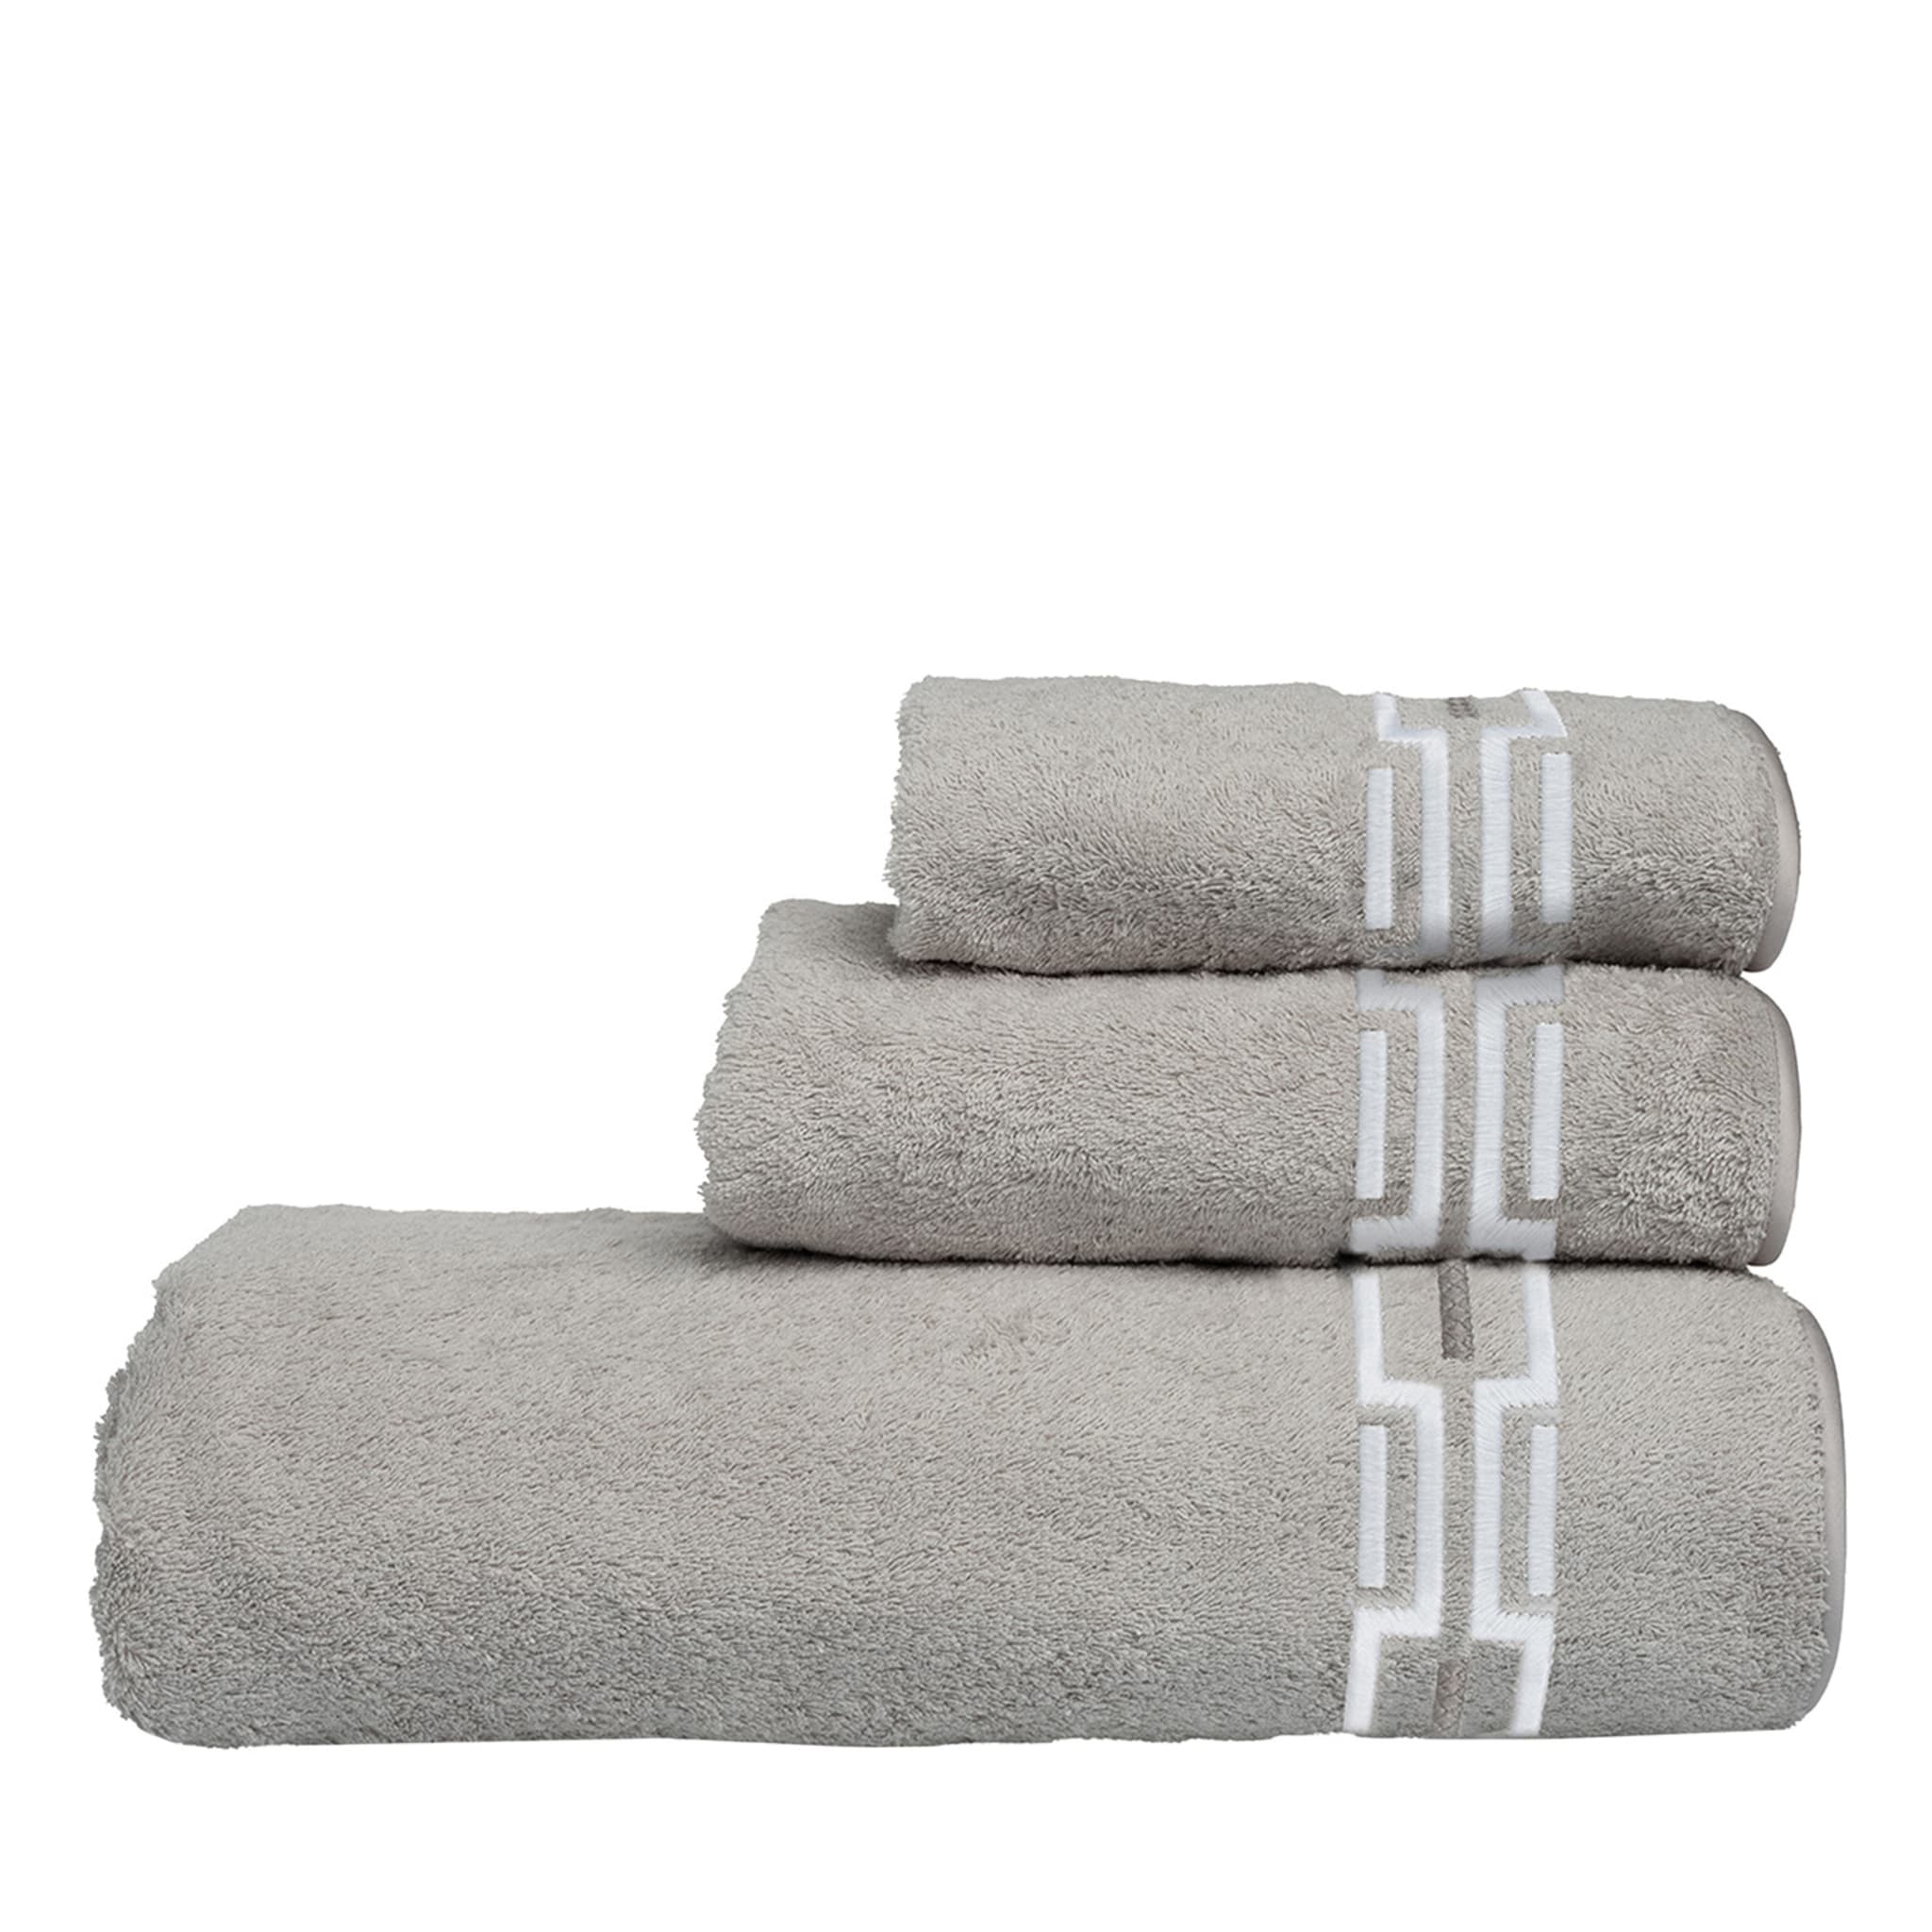 Tibet Set of 3 Bath Towels - Main view